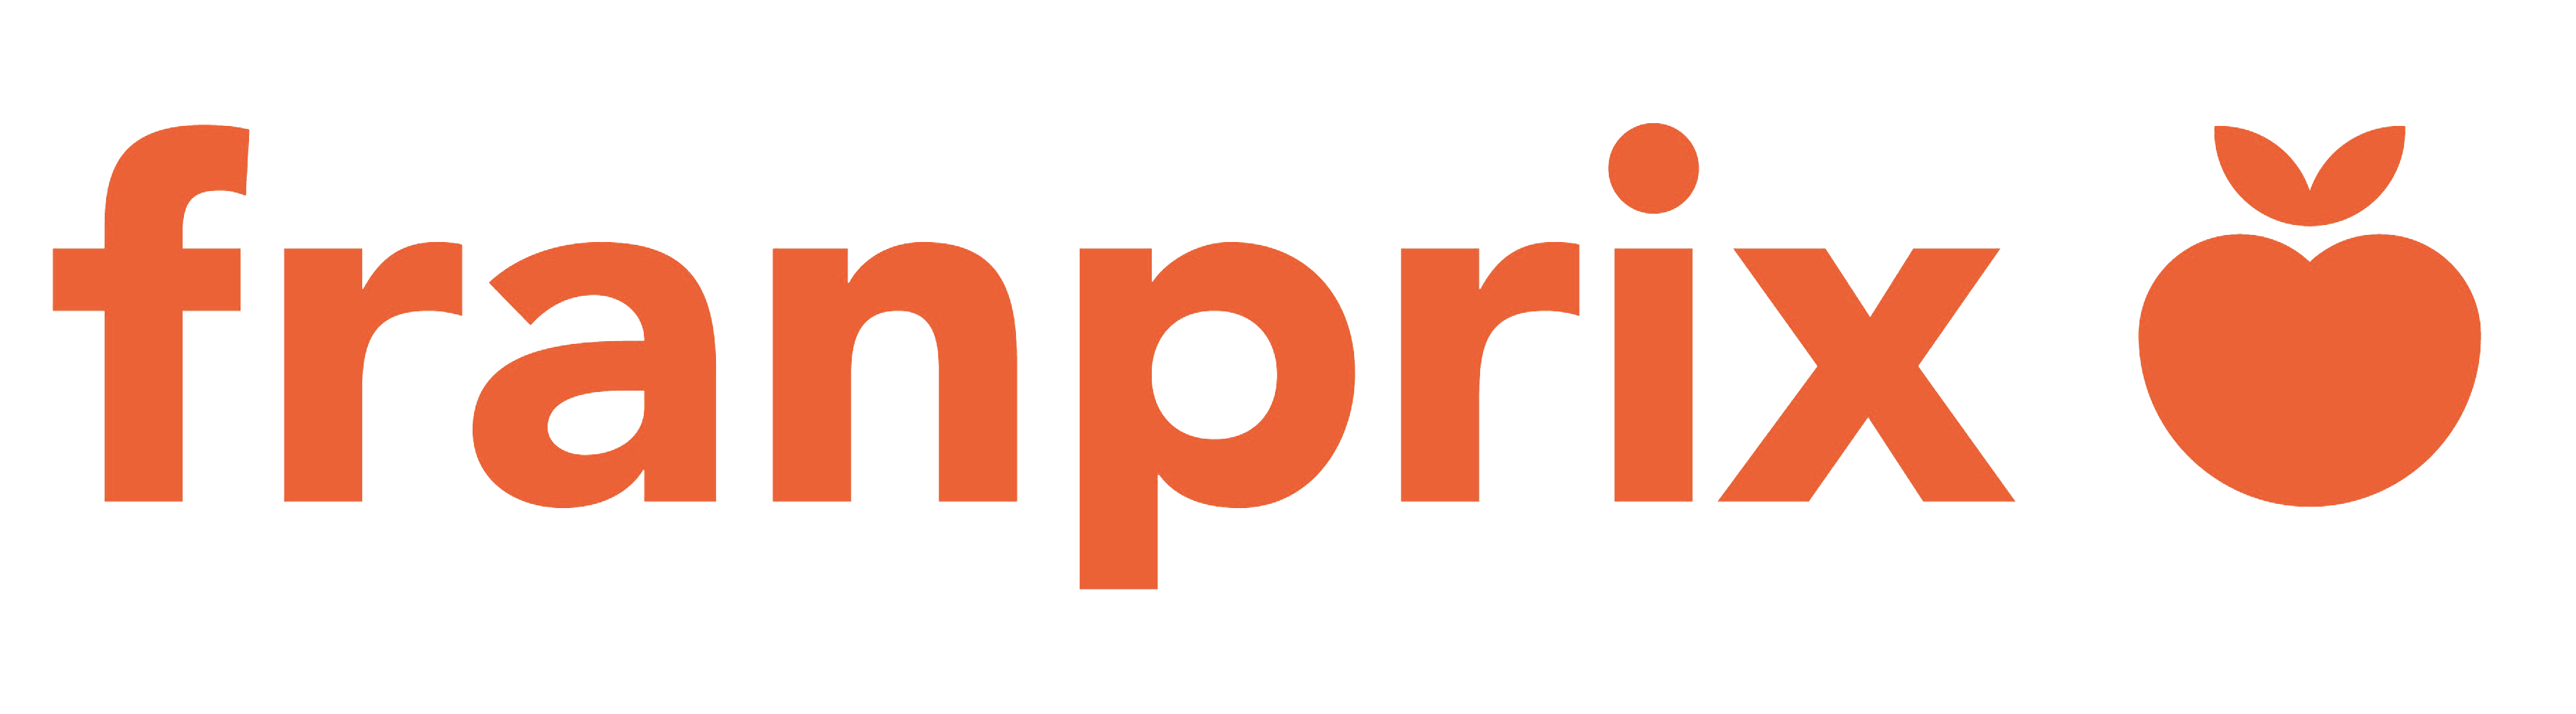 Franprix Brand Logo